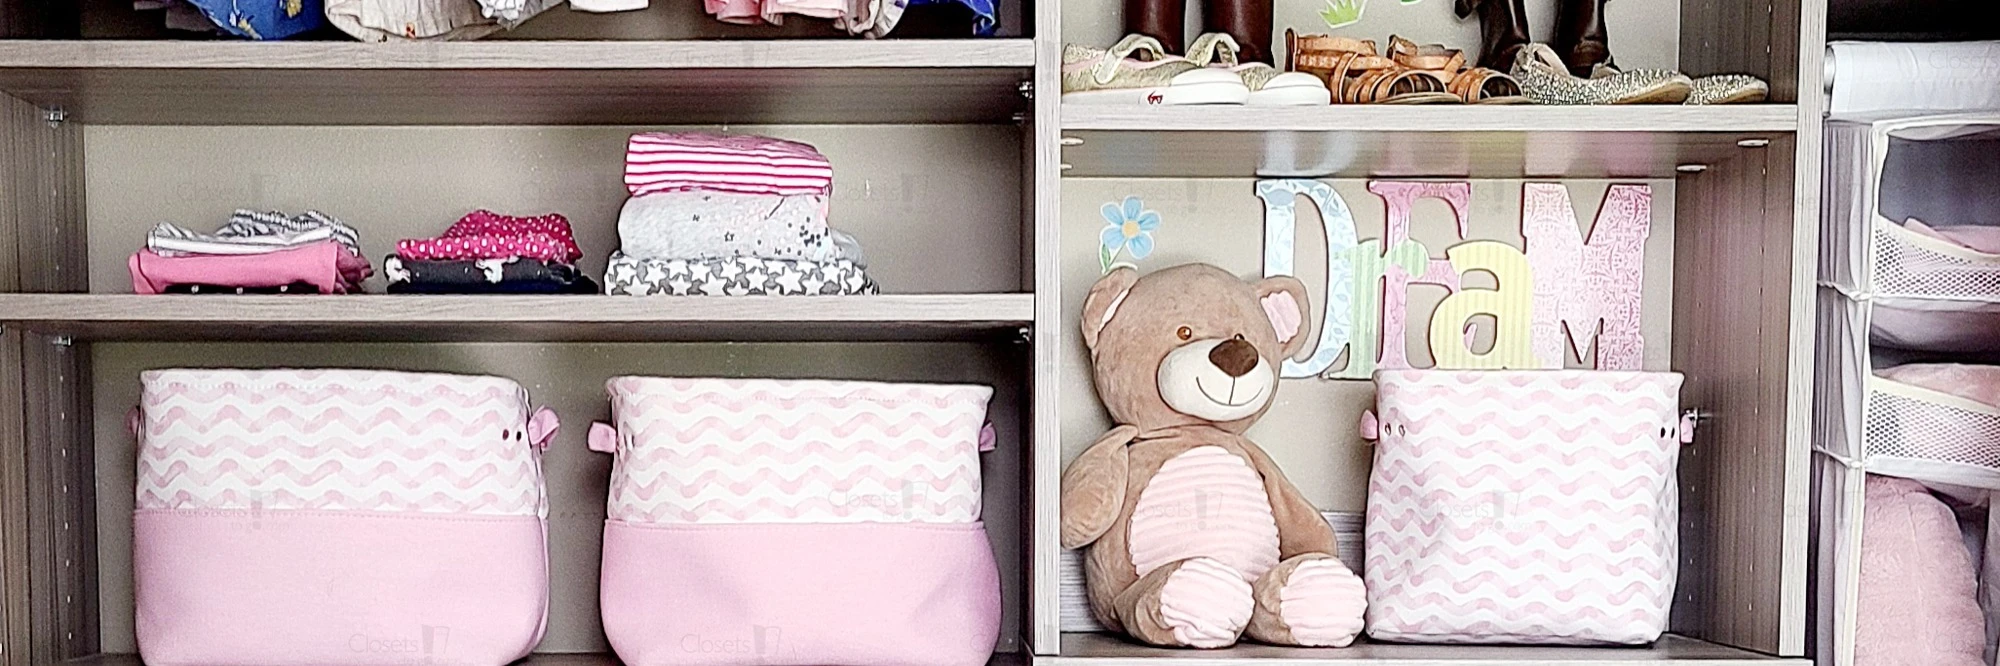 An image of a Kids Closet